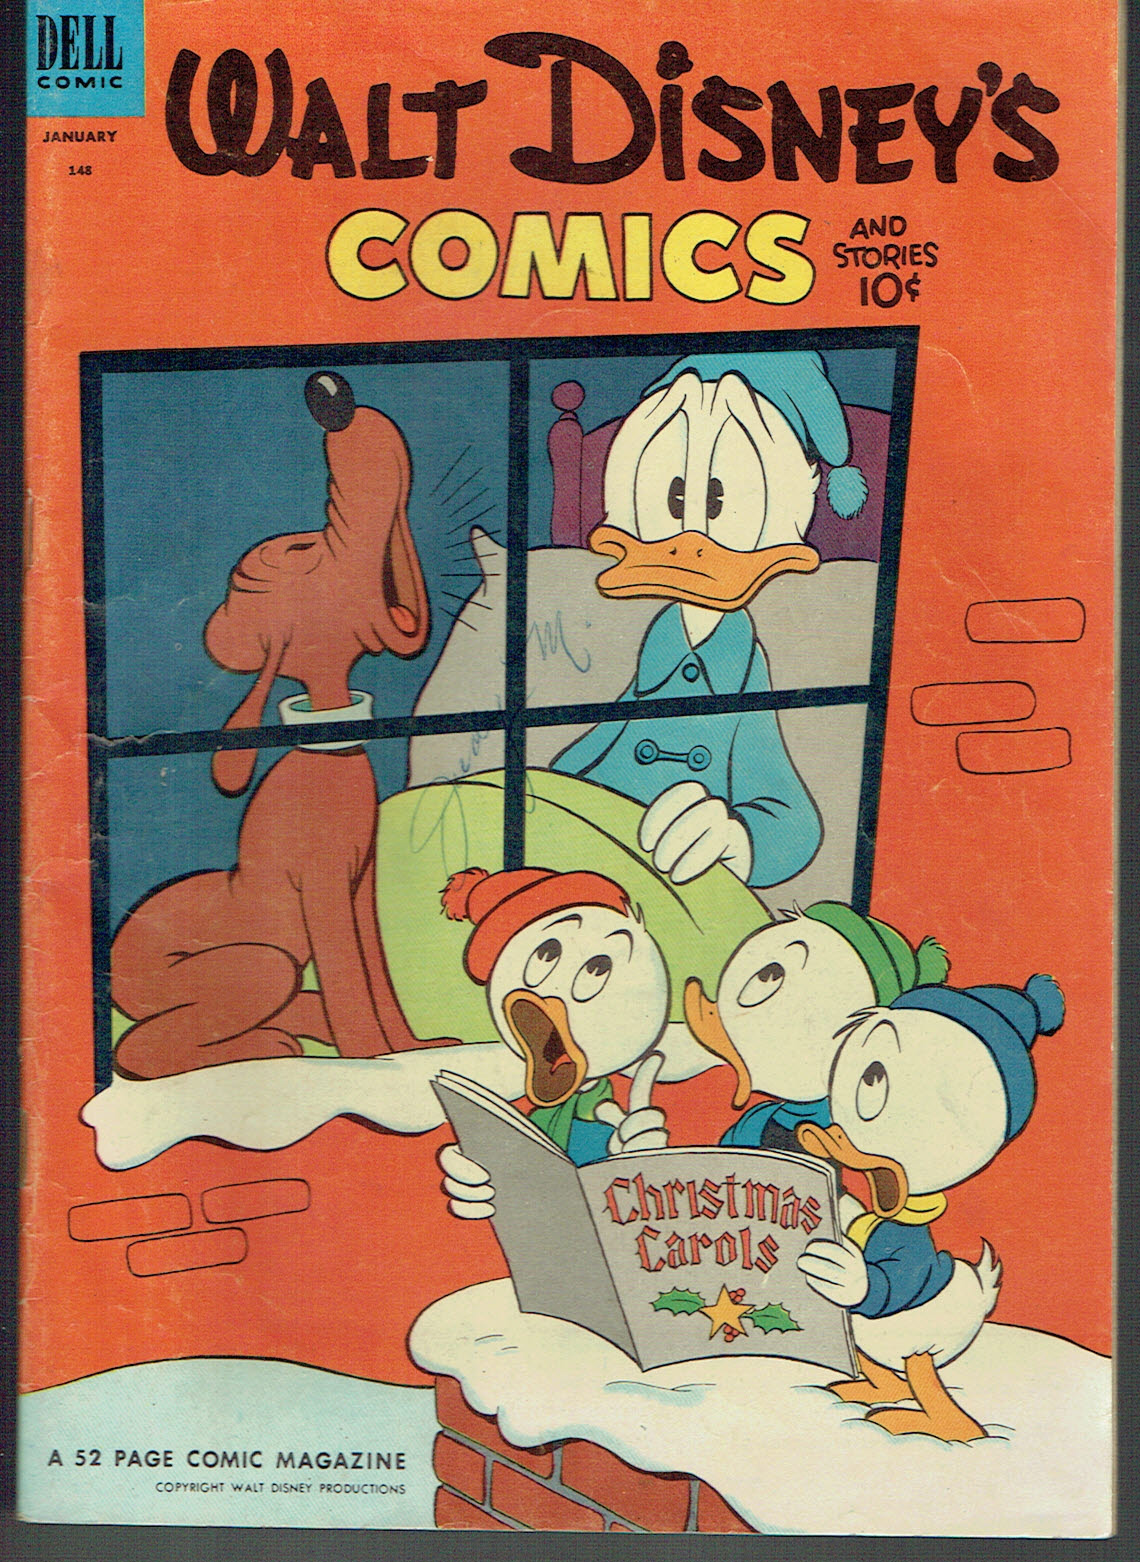 Walt Disneys Comics & Stories #148